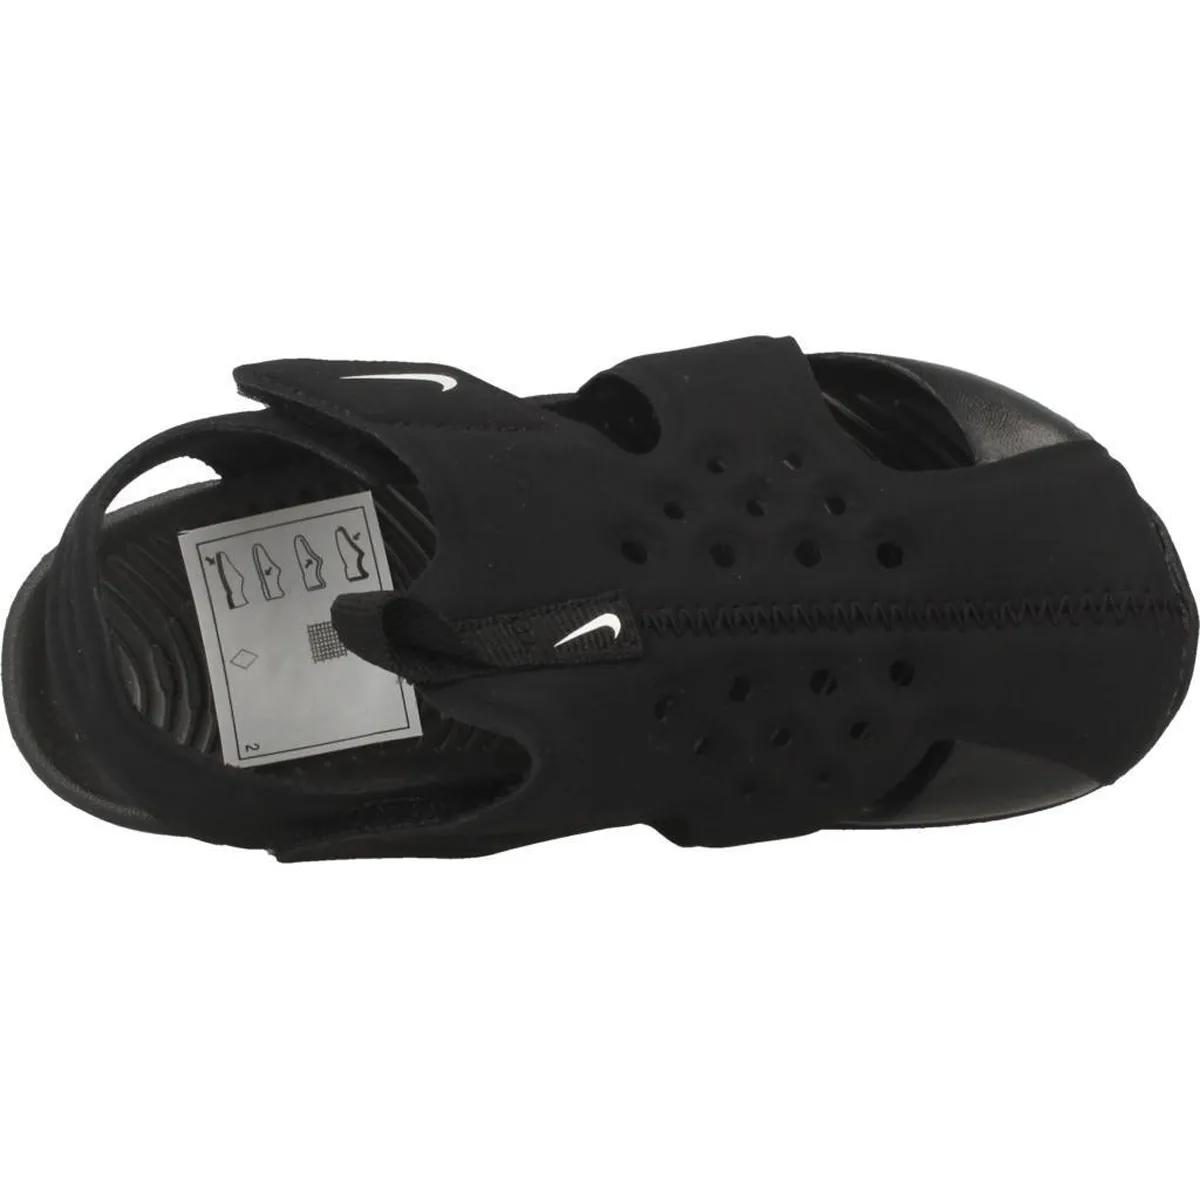 Nike Sandale Sunray Protect 2 